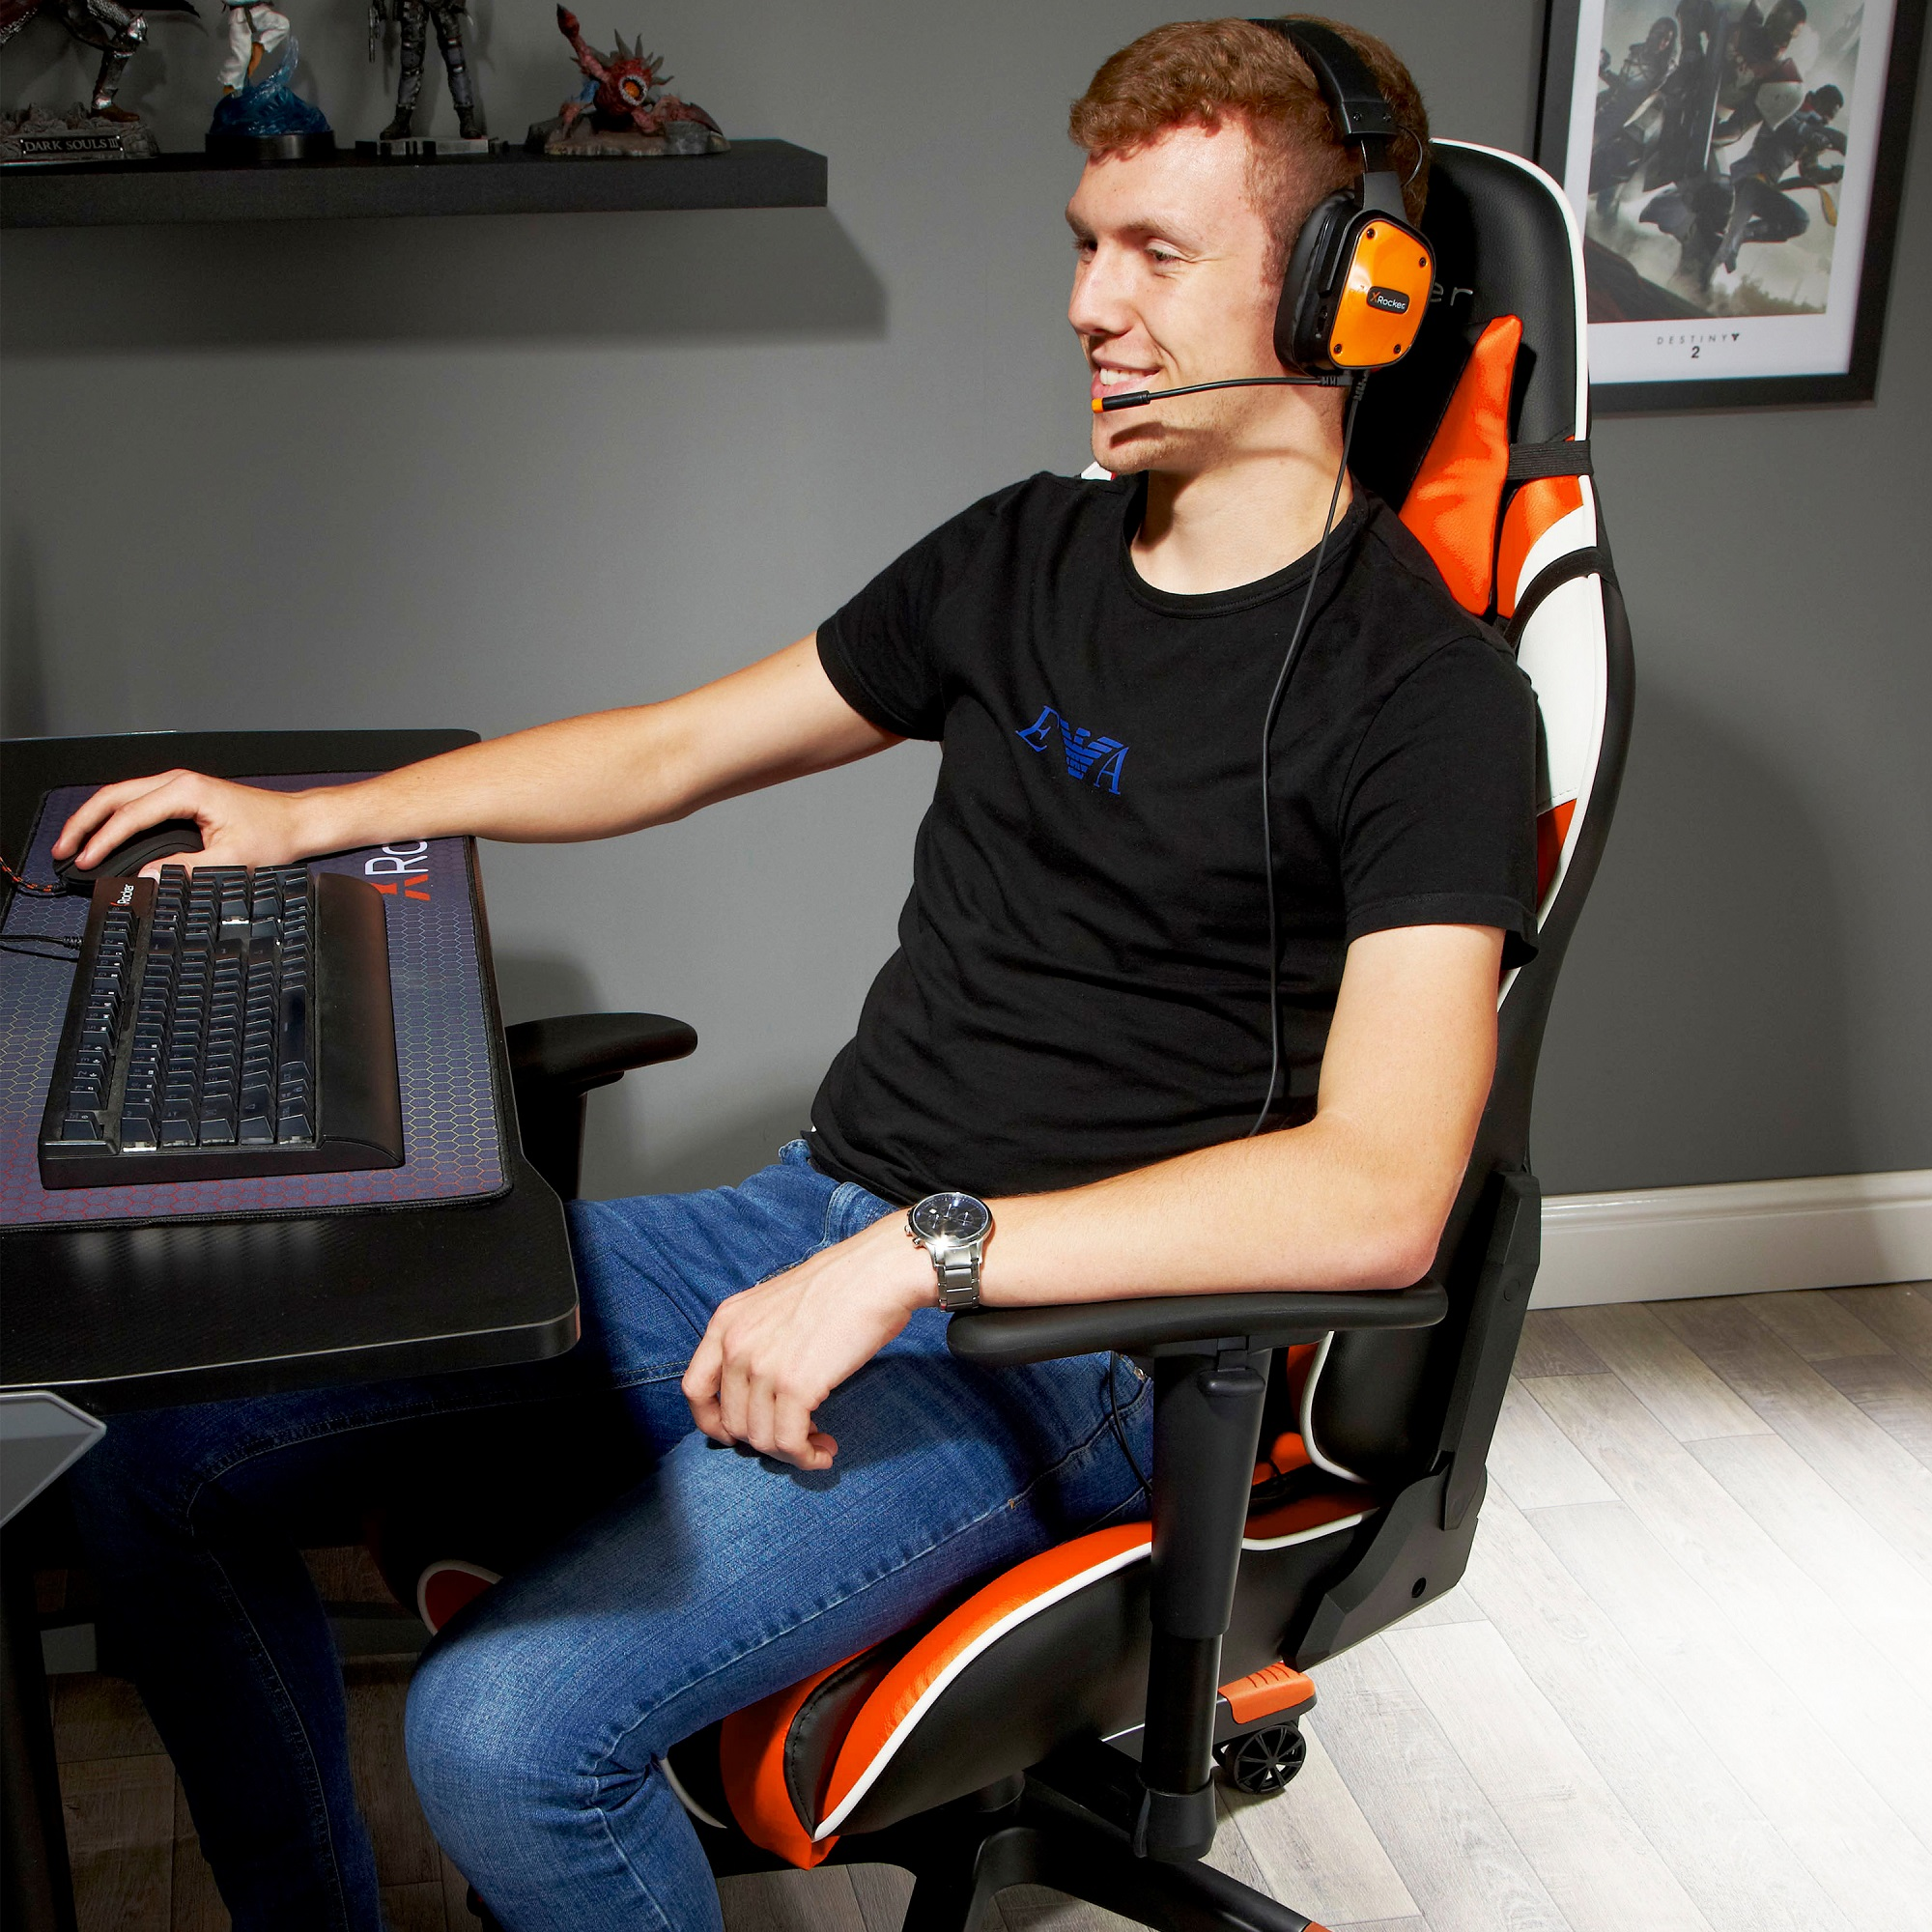 eSports ROCKER Orange X Agility Gaming Stuhl,